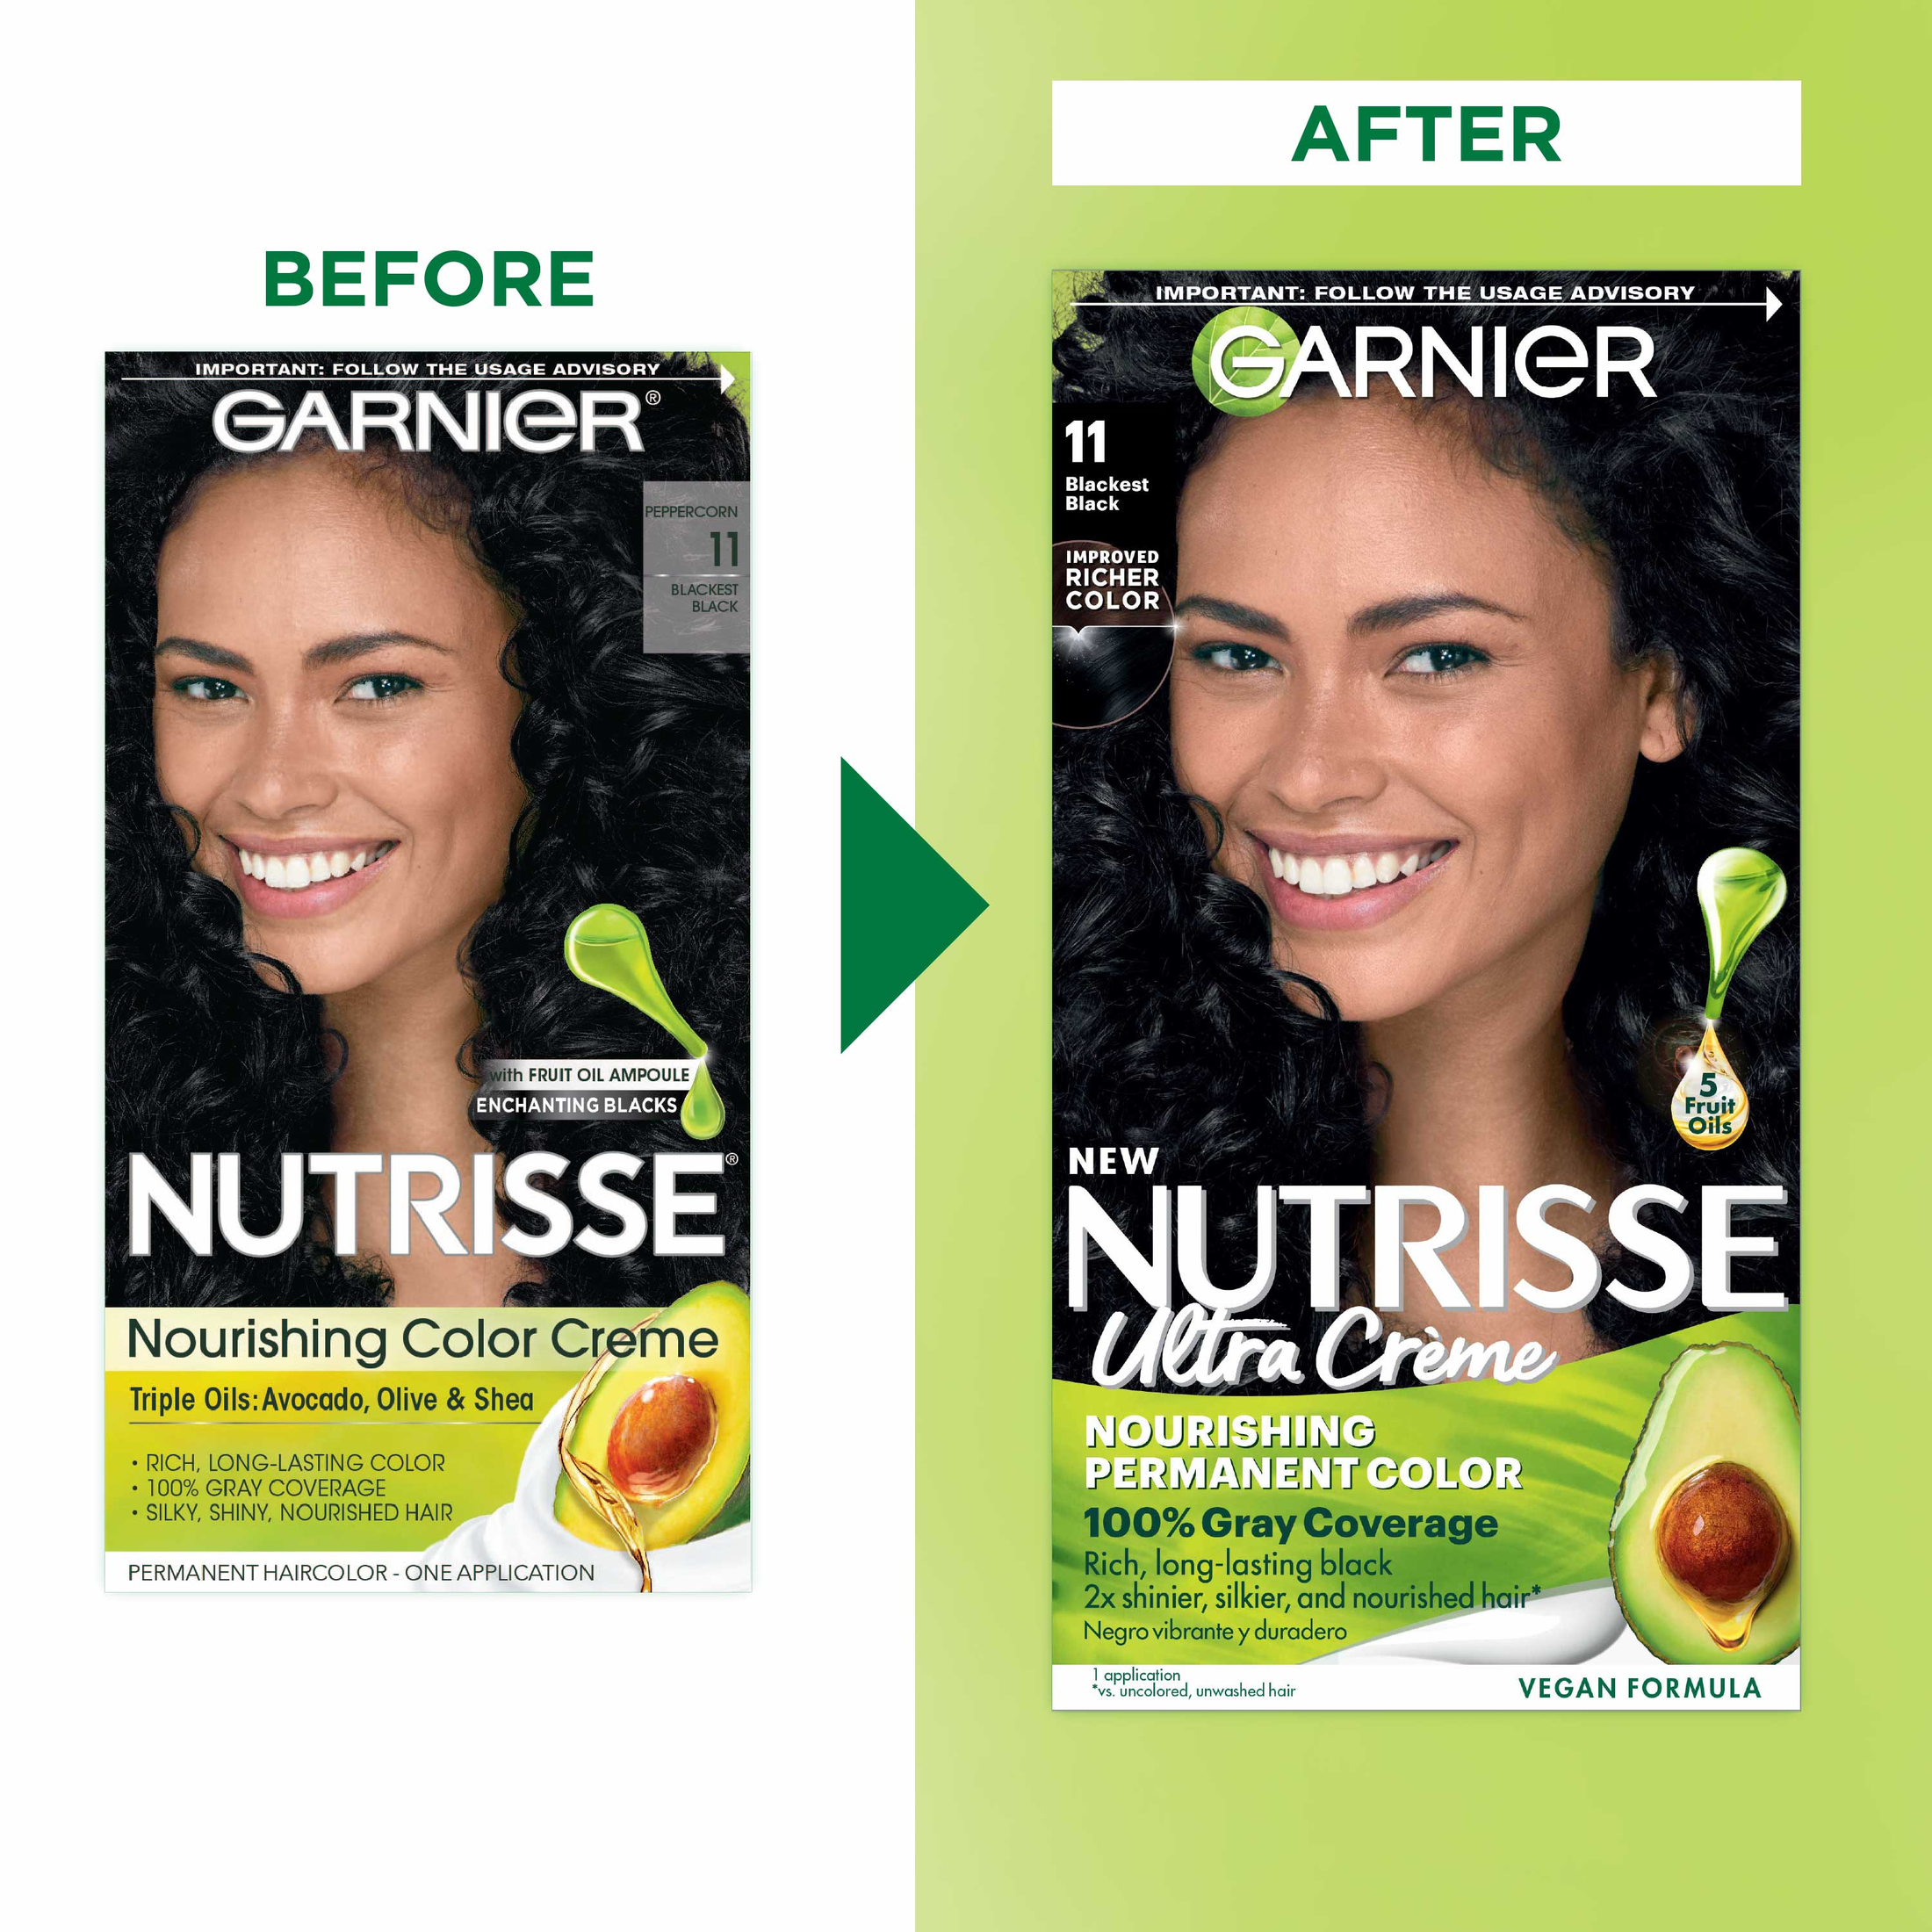 Garnier Nutrisse Nourishing Hair Color Creme, 11 Blackest Black - image 3 of 11